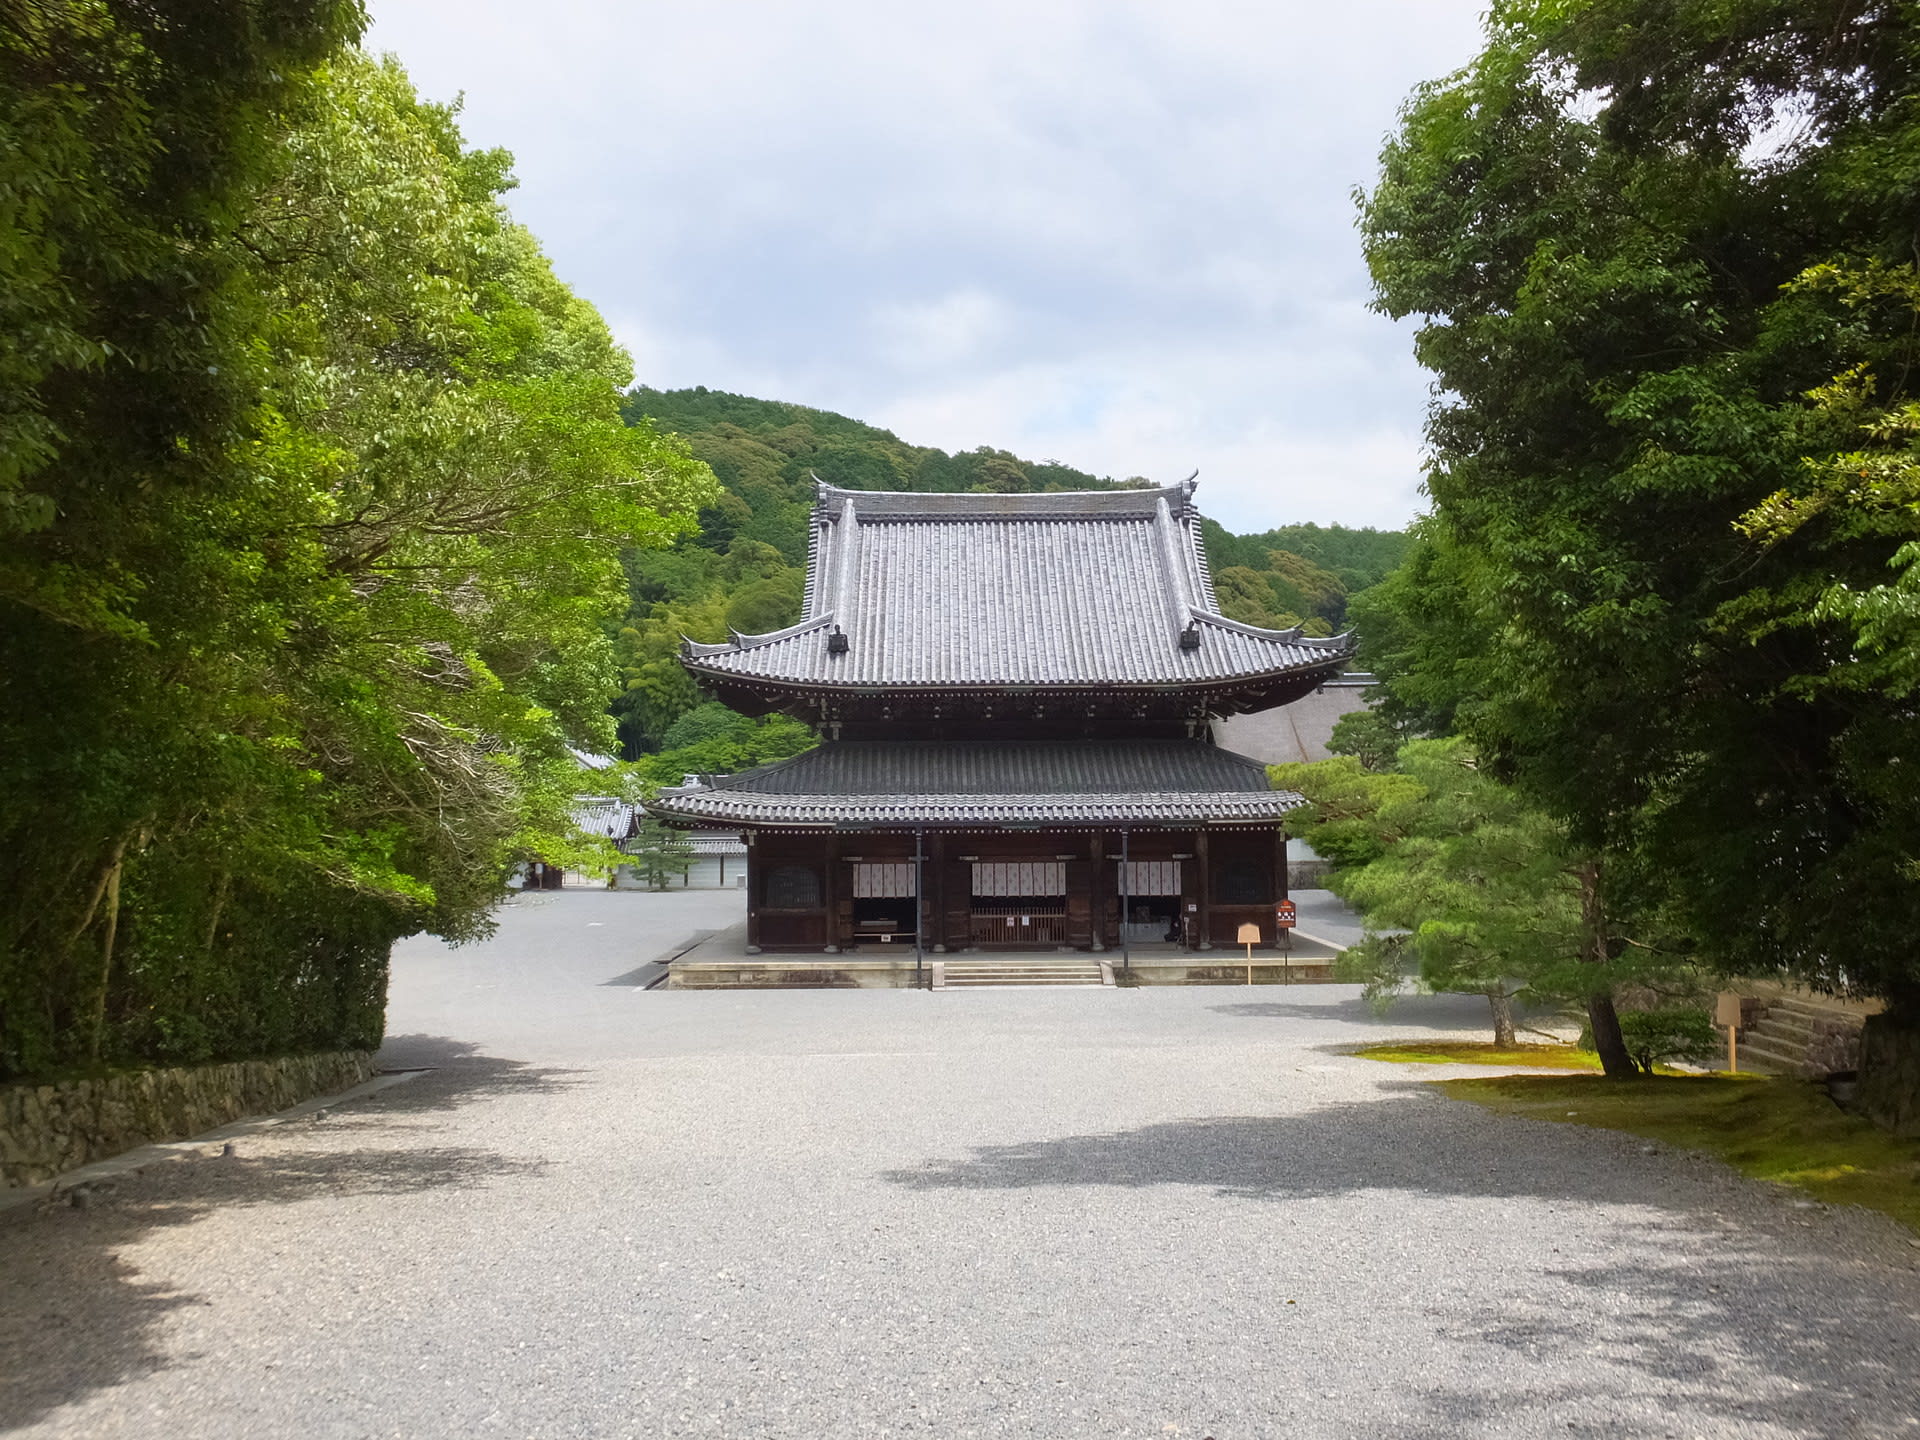 泉涌寺 今熊野観音寺の菩提樹と青紅葉 京都で定年後生活